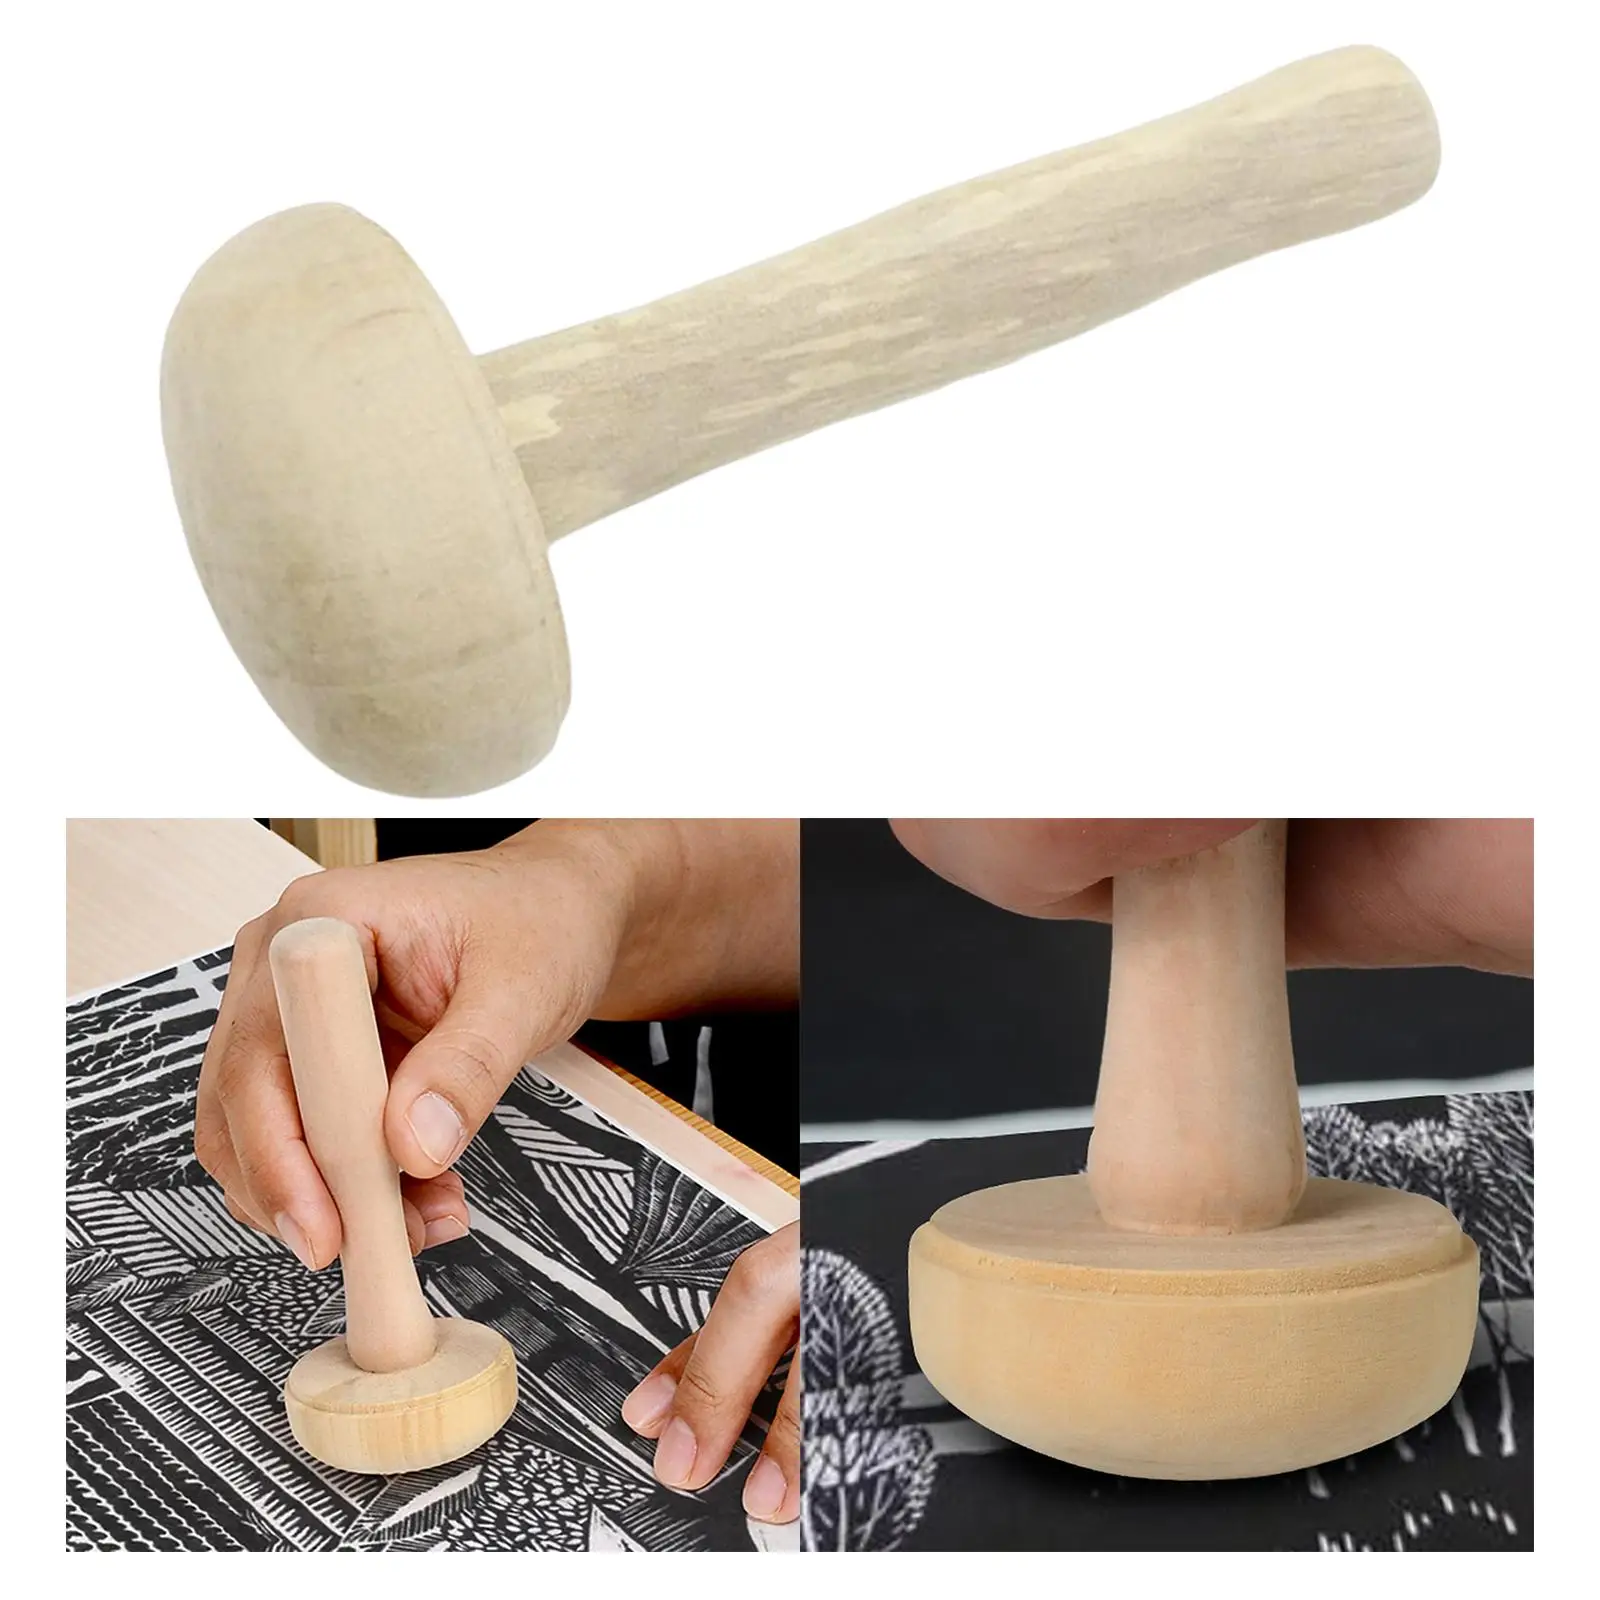 Wood Mushroom Rollers, Block Printing Tools,Rubbing Printmaking Tools, Painting, Crafts Stamp Making Ink Rubbing Grindroller